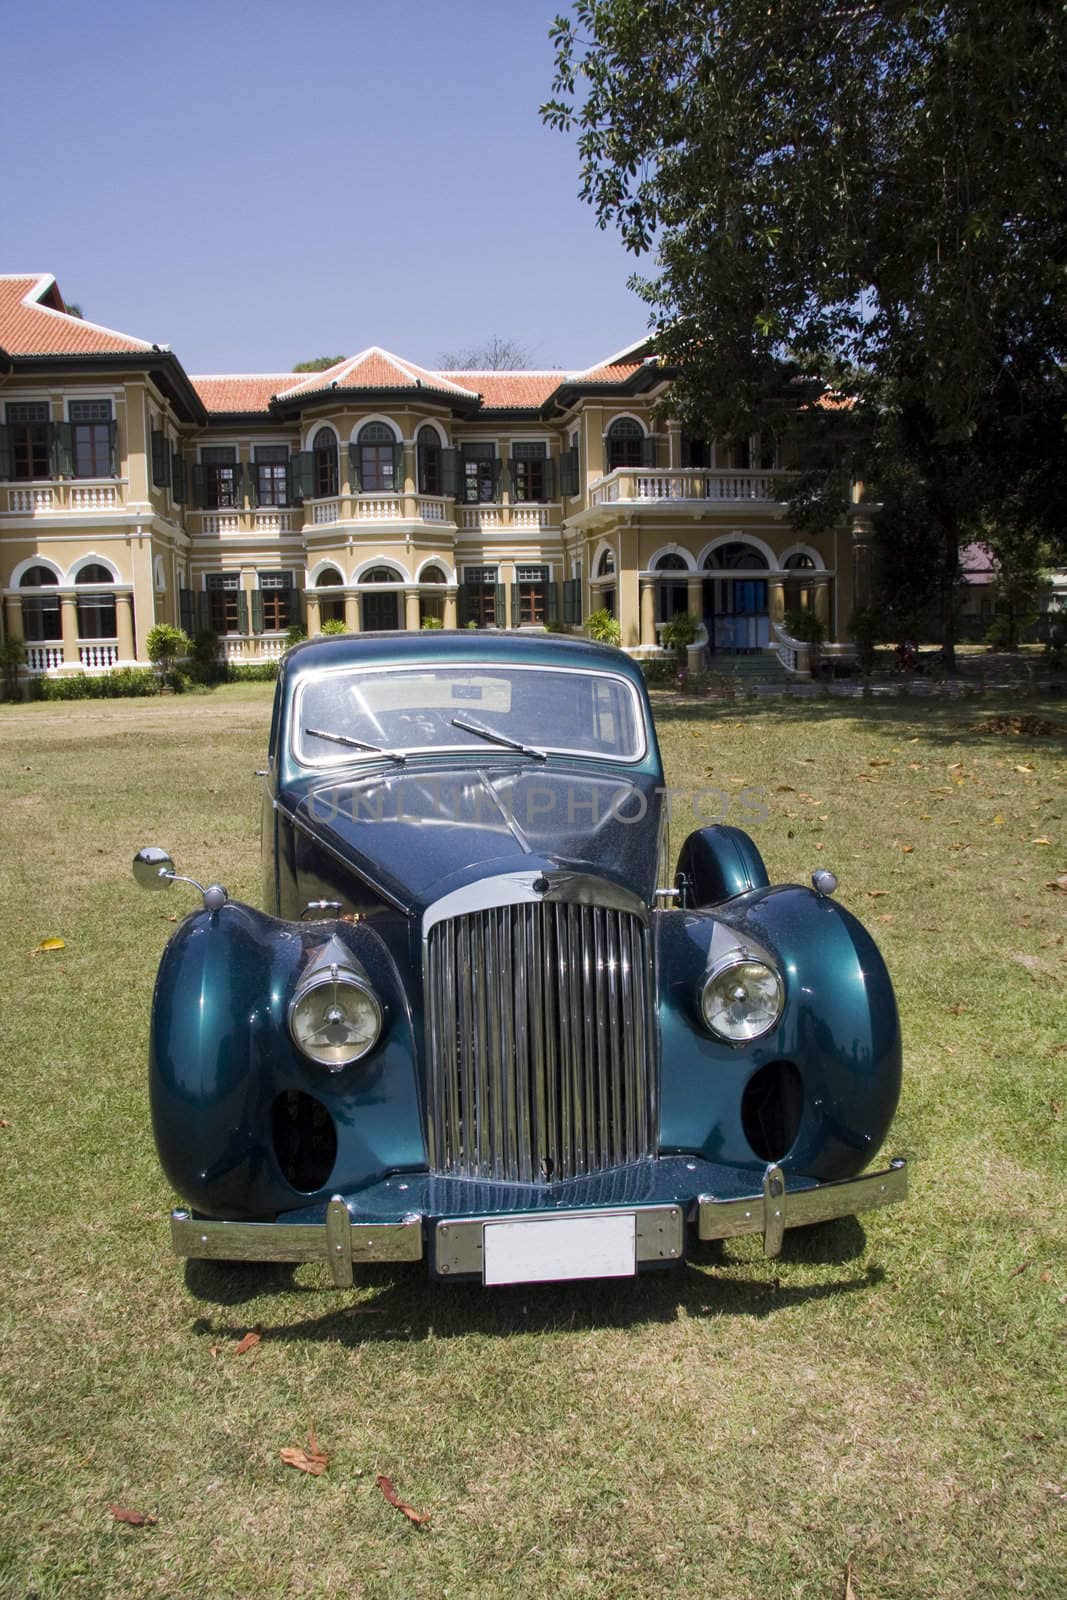 Vintage car and mansion